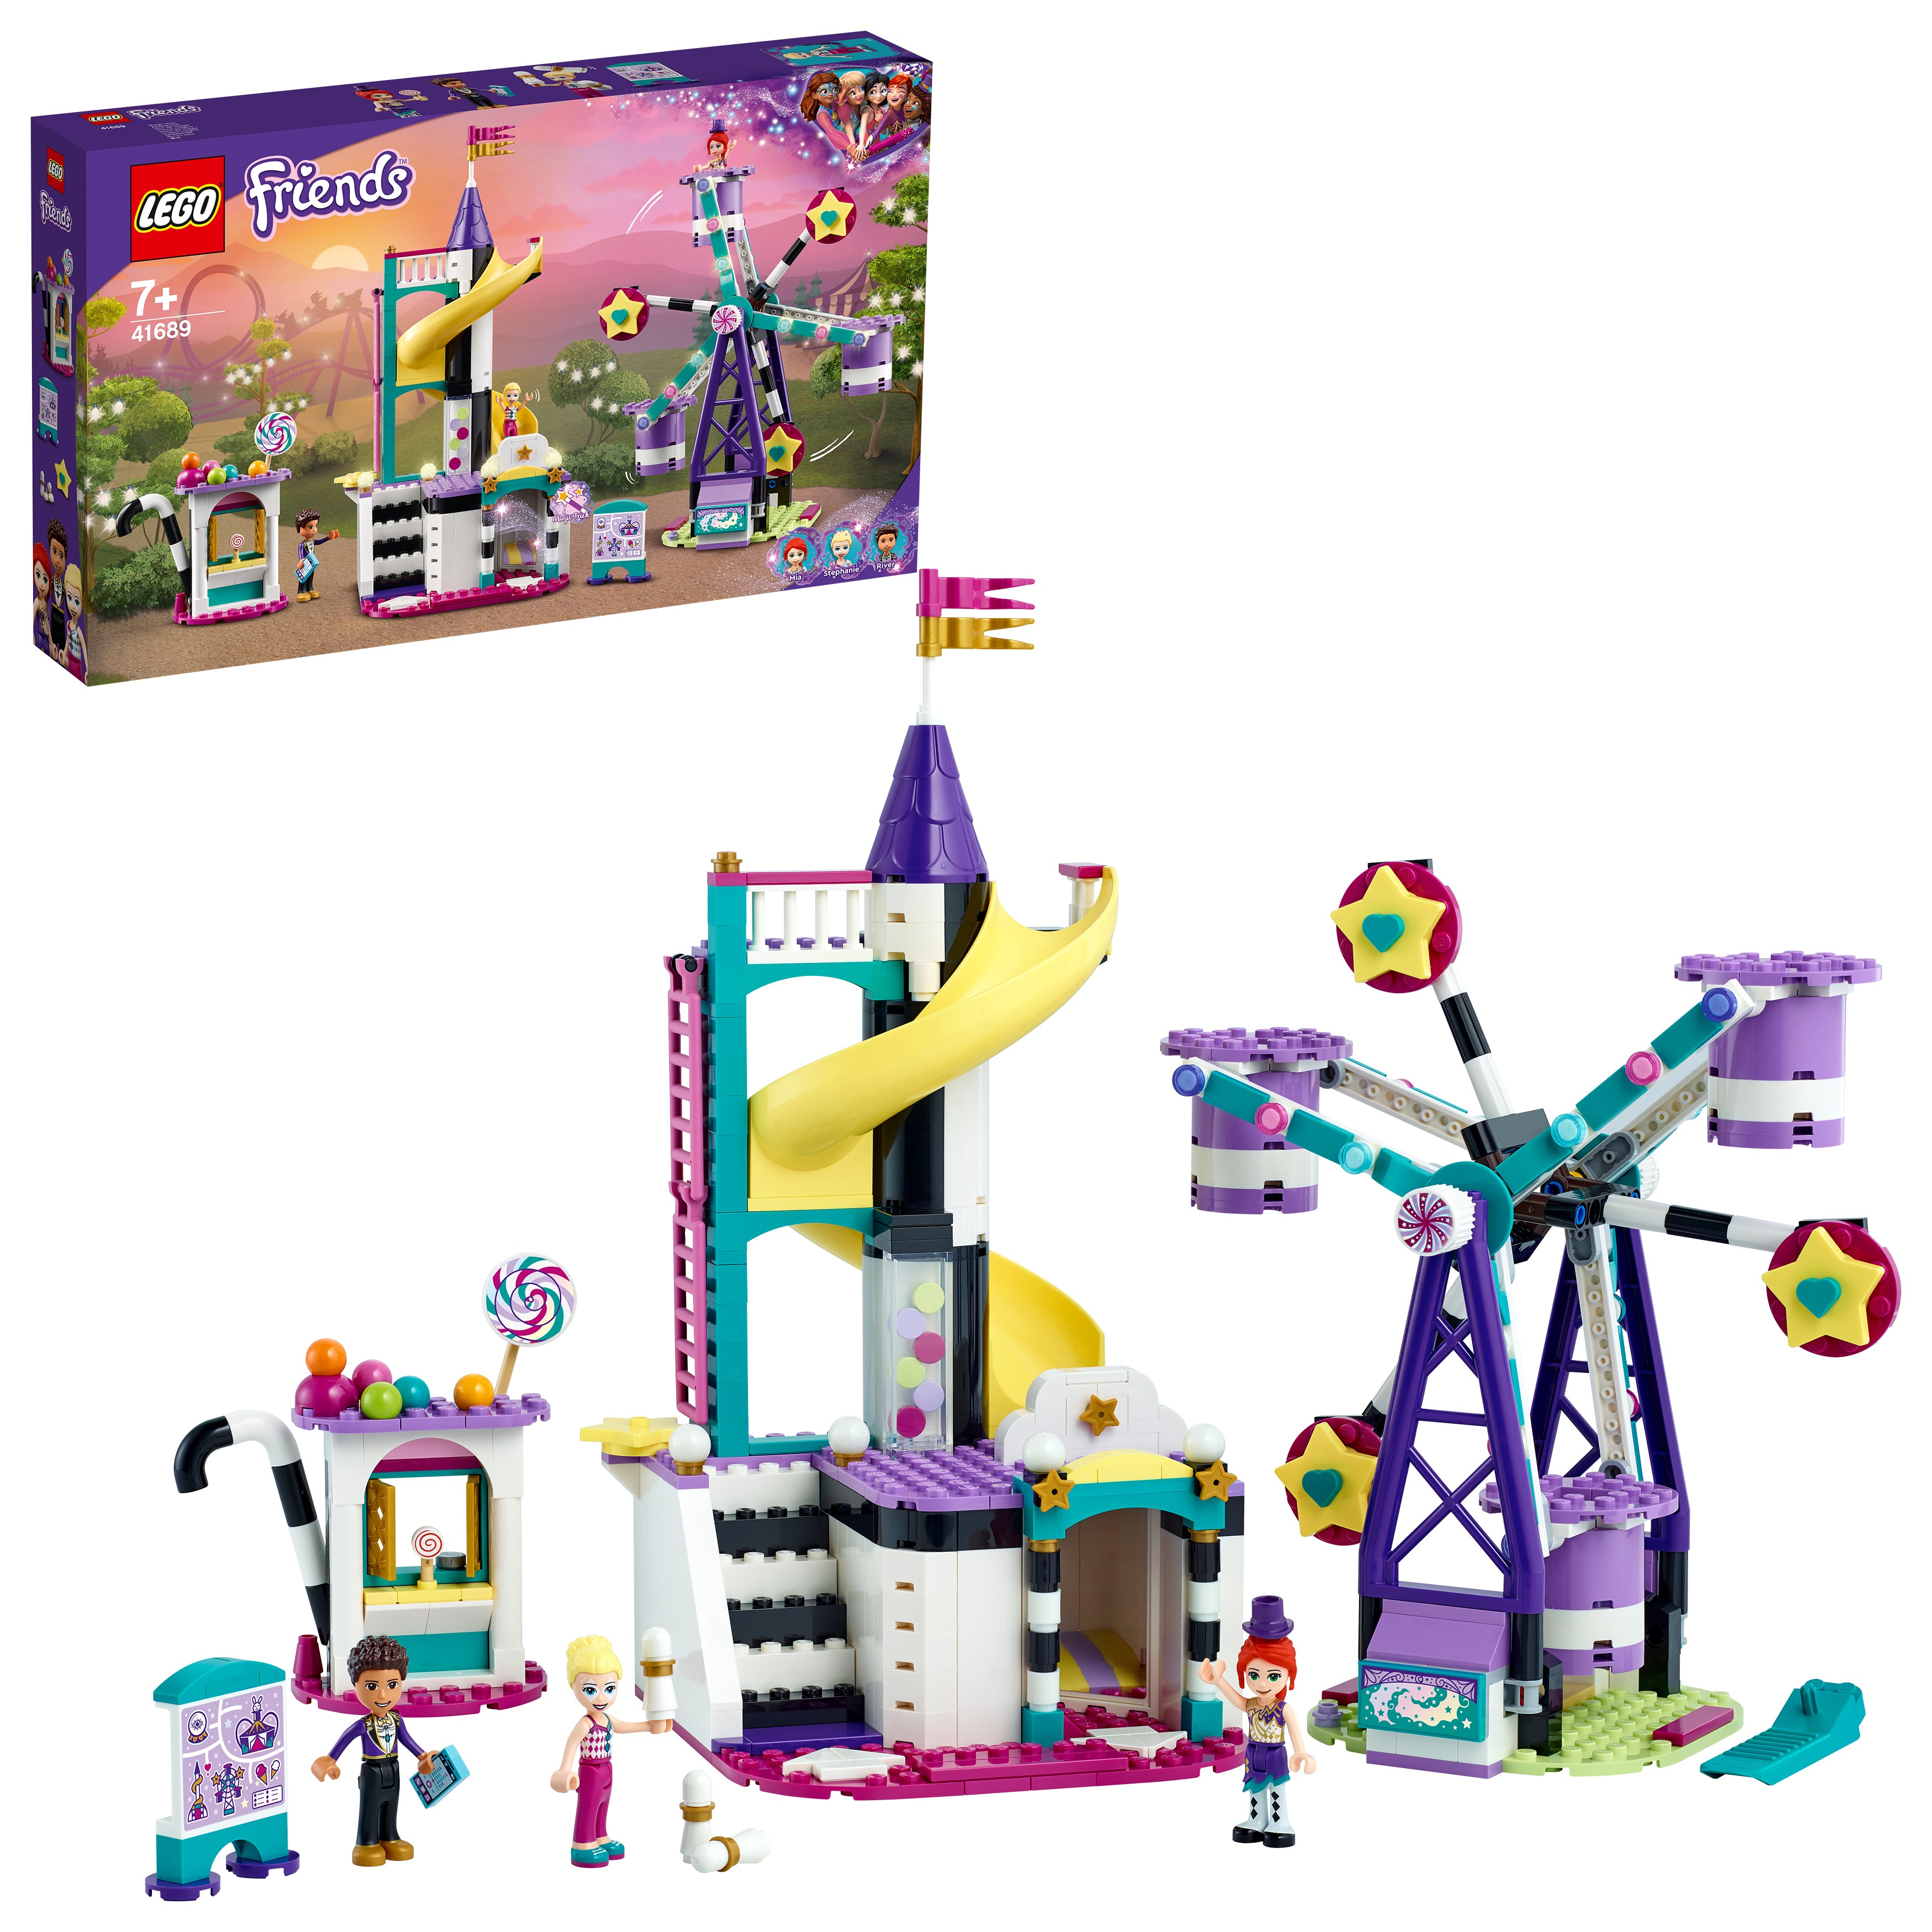 Lego 41689 Magical Ferris